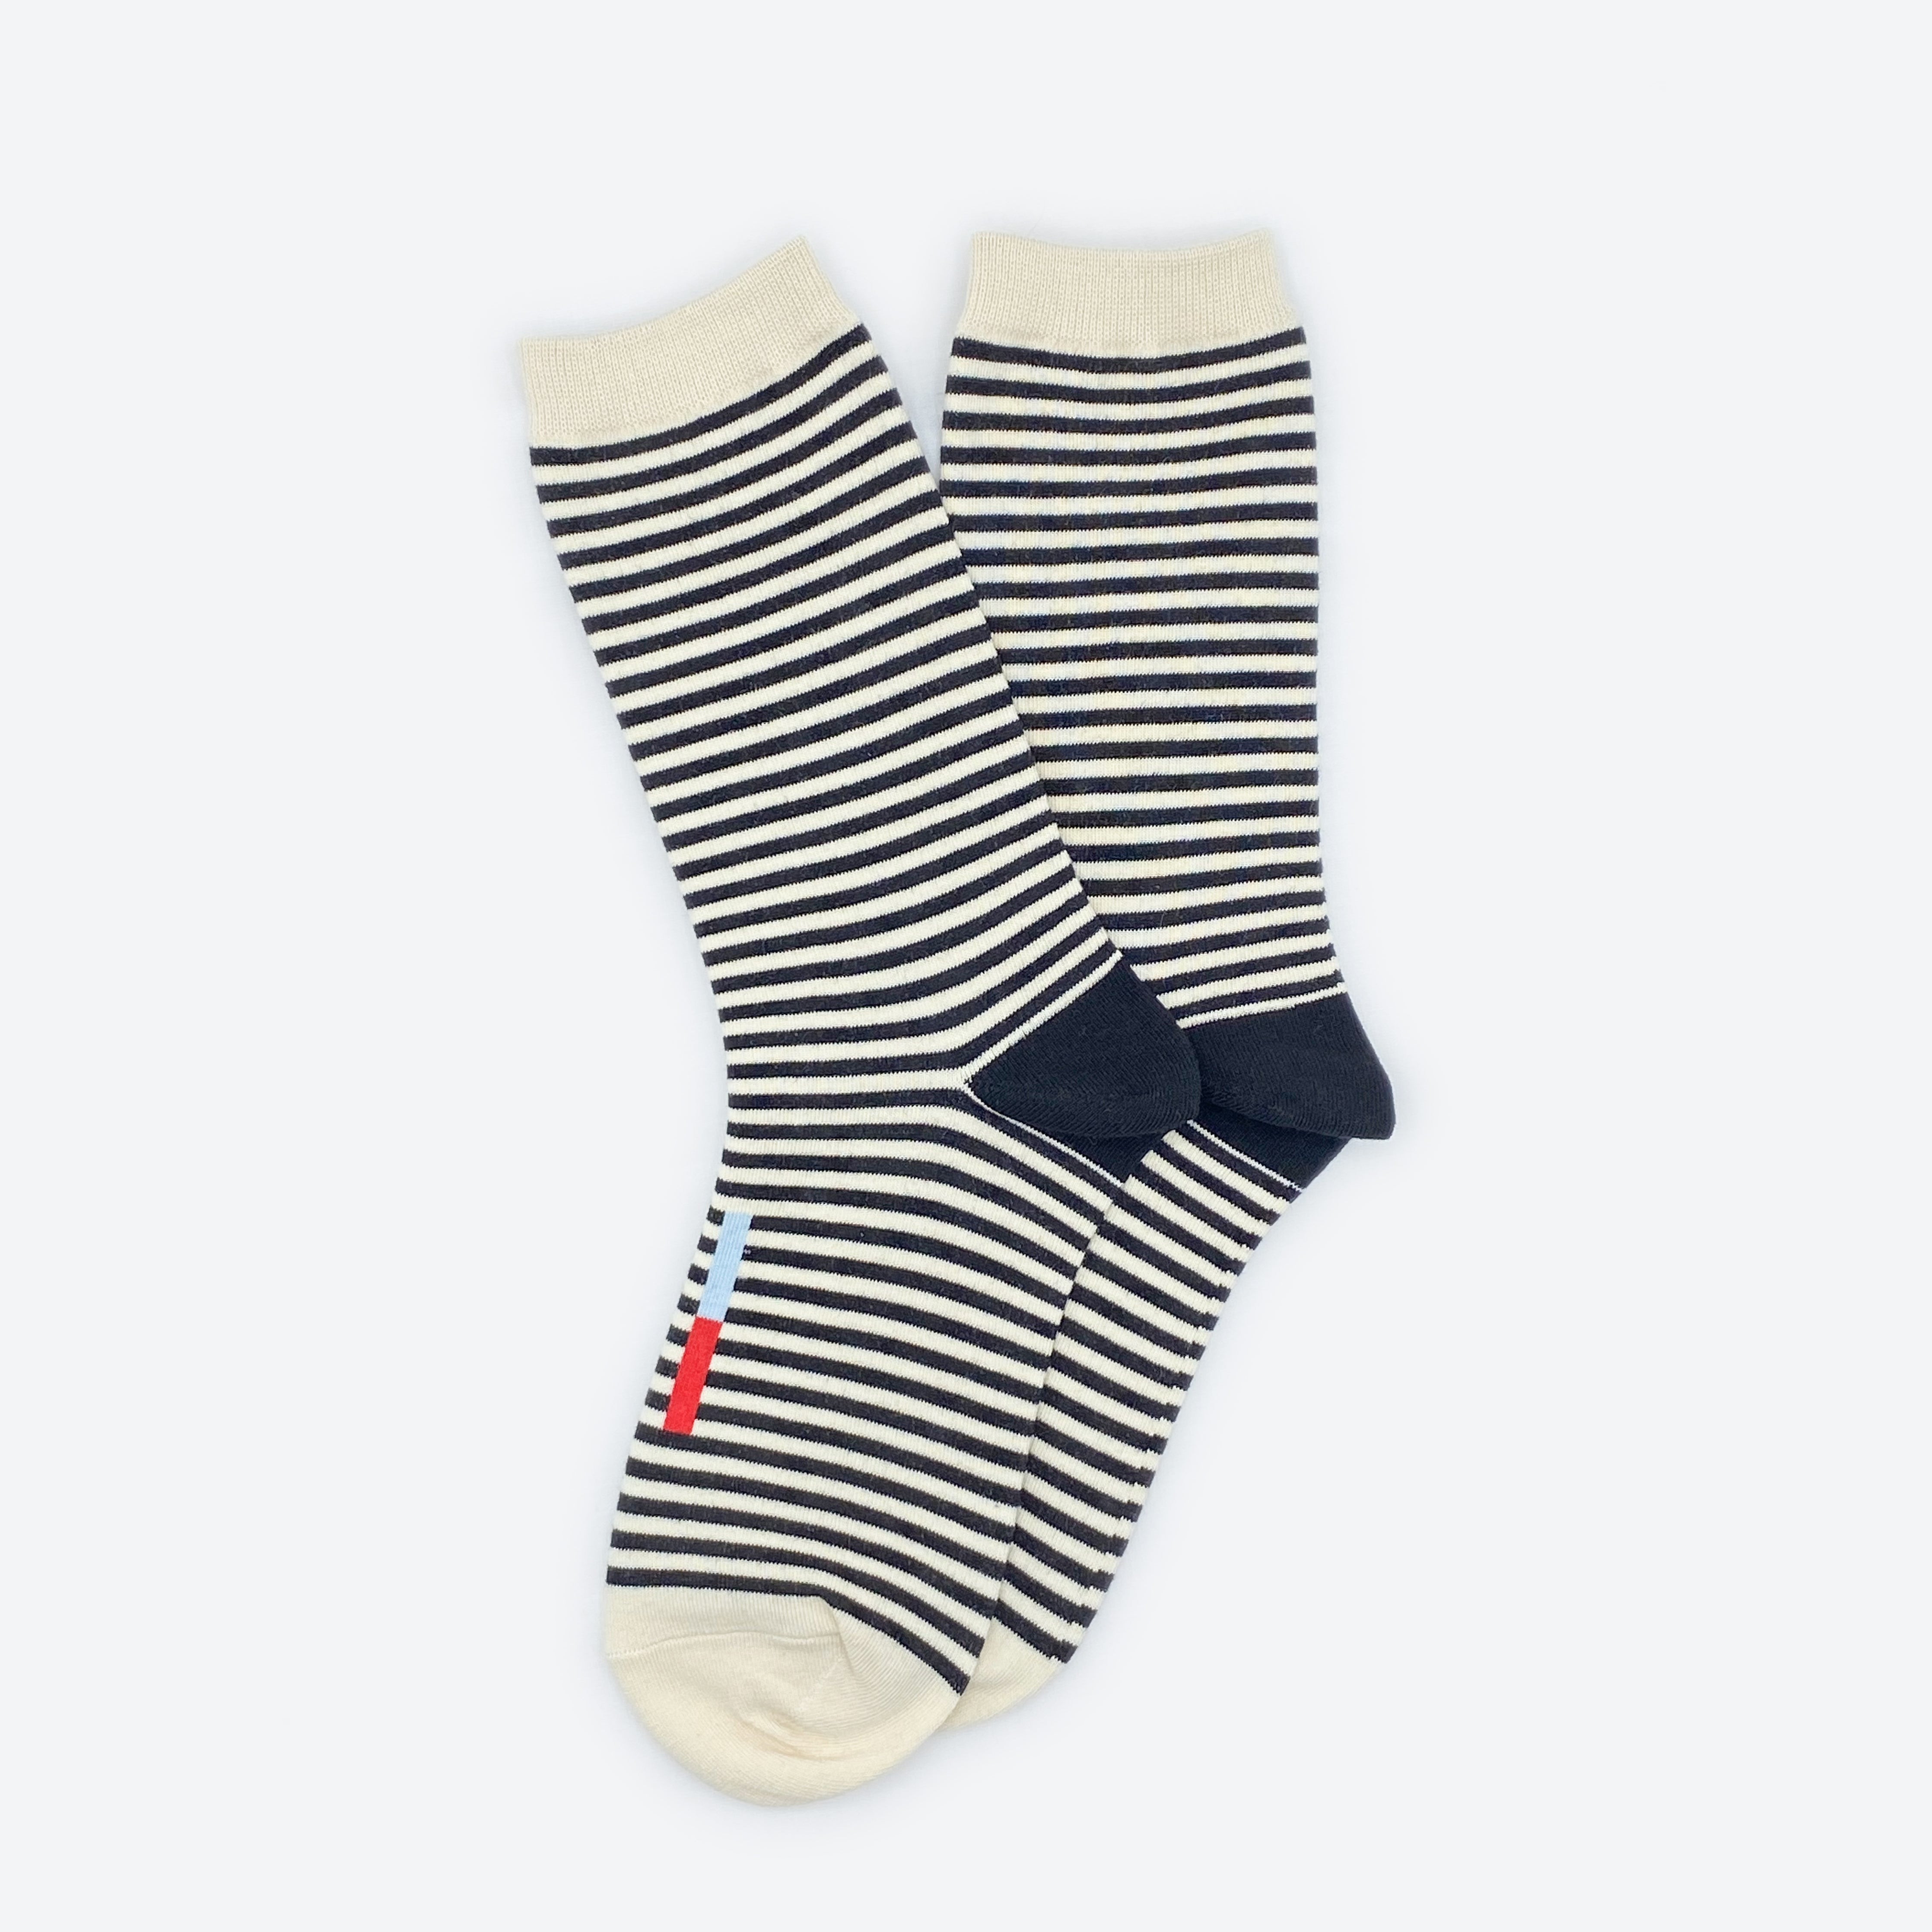 Hooray Sock Co.&#39;s Cole Crew Socks: Classic black &amp; off-white stripes, 80% cotton/20% spandex blend. Men&#39;s (8-12) &amp; women&#39;s (4-10) sizes.